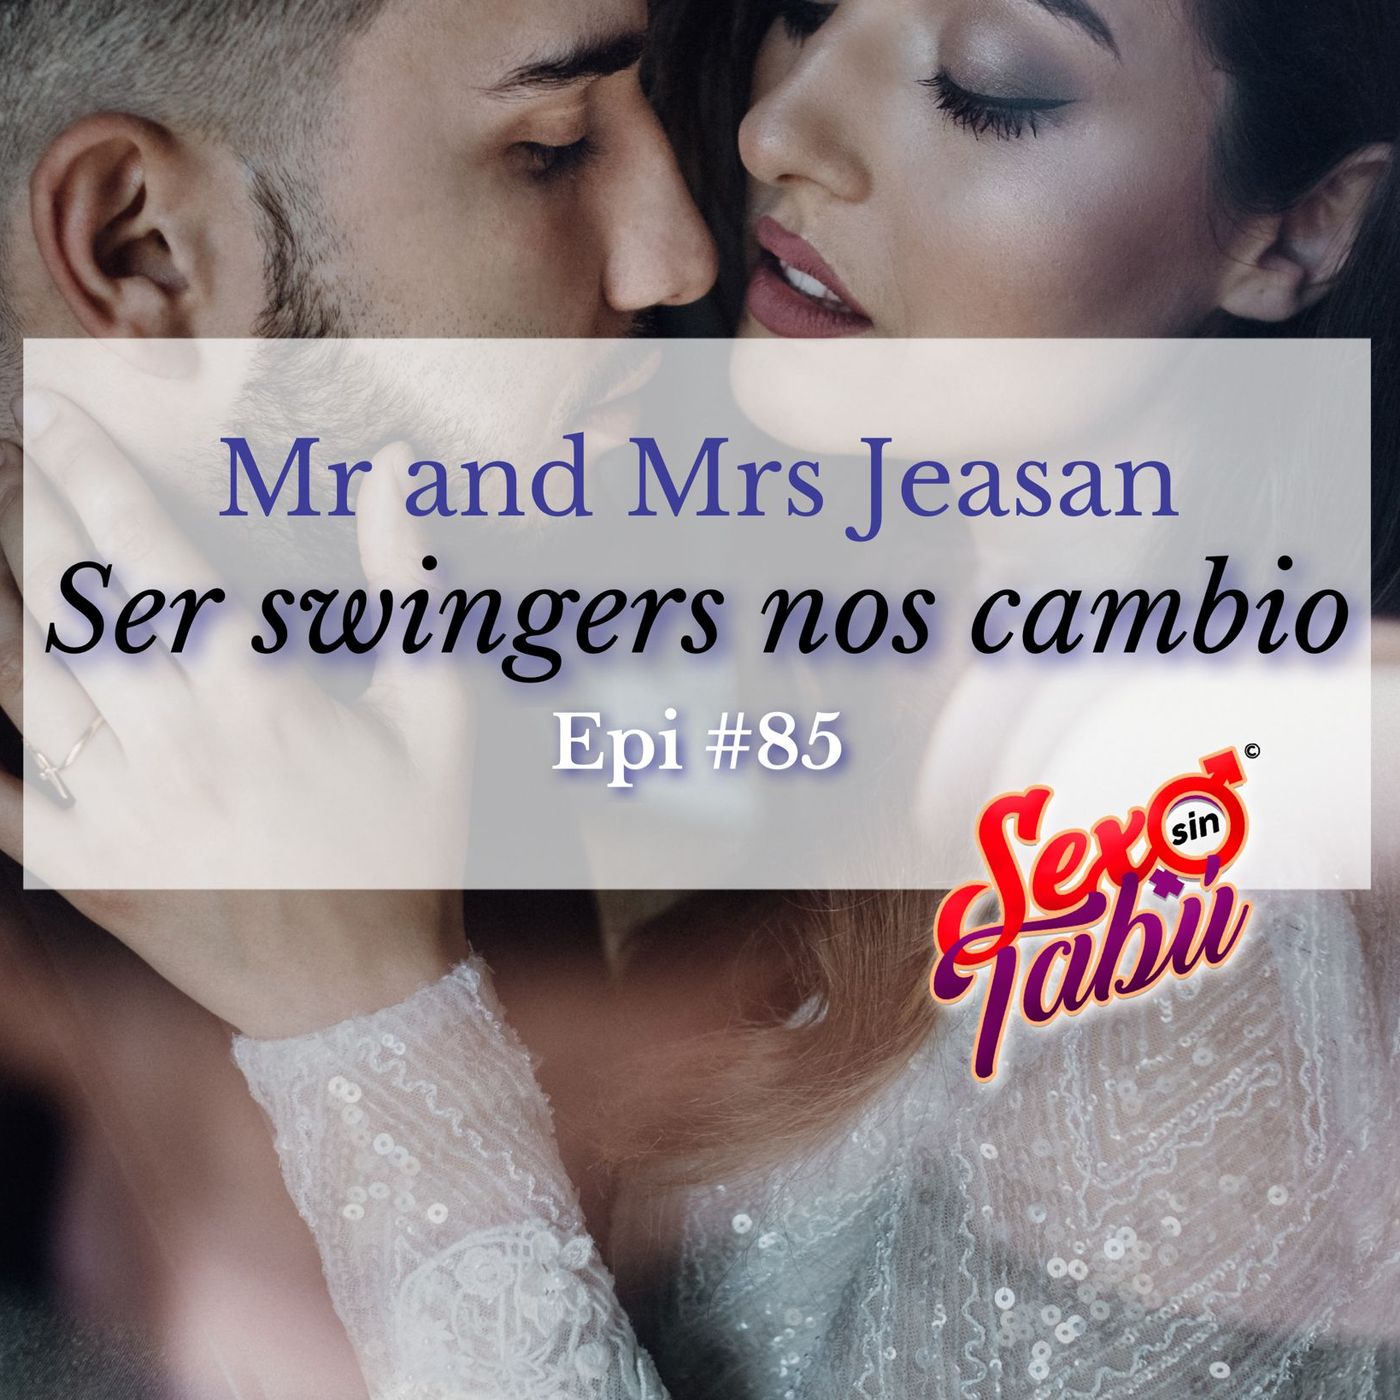 Mr and Mrs Jeasan Ser swingers nos cambio Epi #85 – Sexo sin Tabú – Podcast  imagen imagen